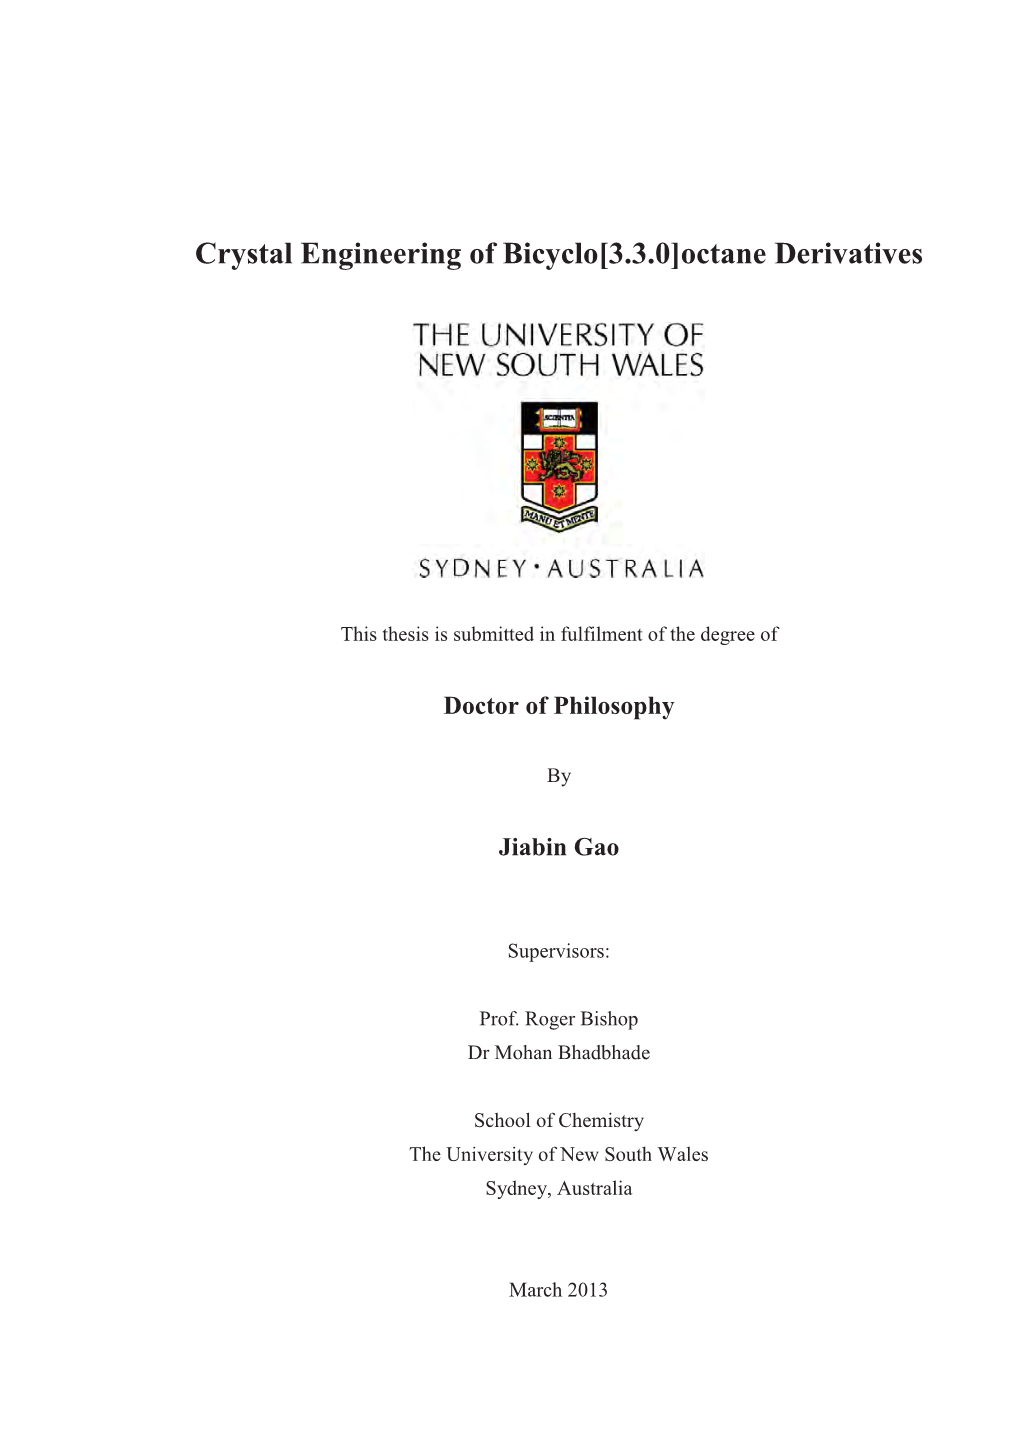 Crystal Engineering of Bicyclo[3.3.0]Octane Derivatives